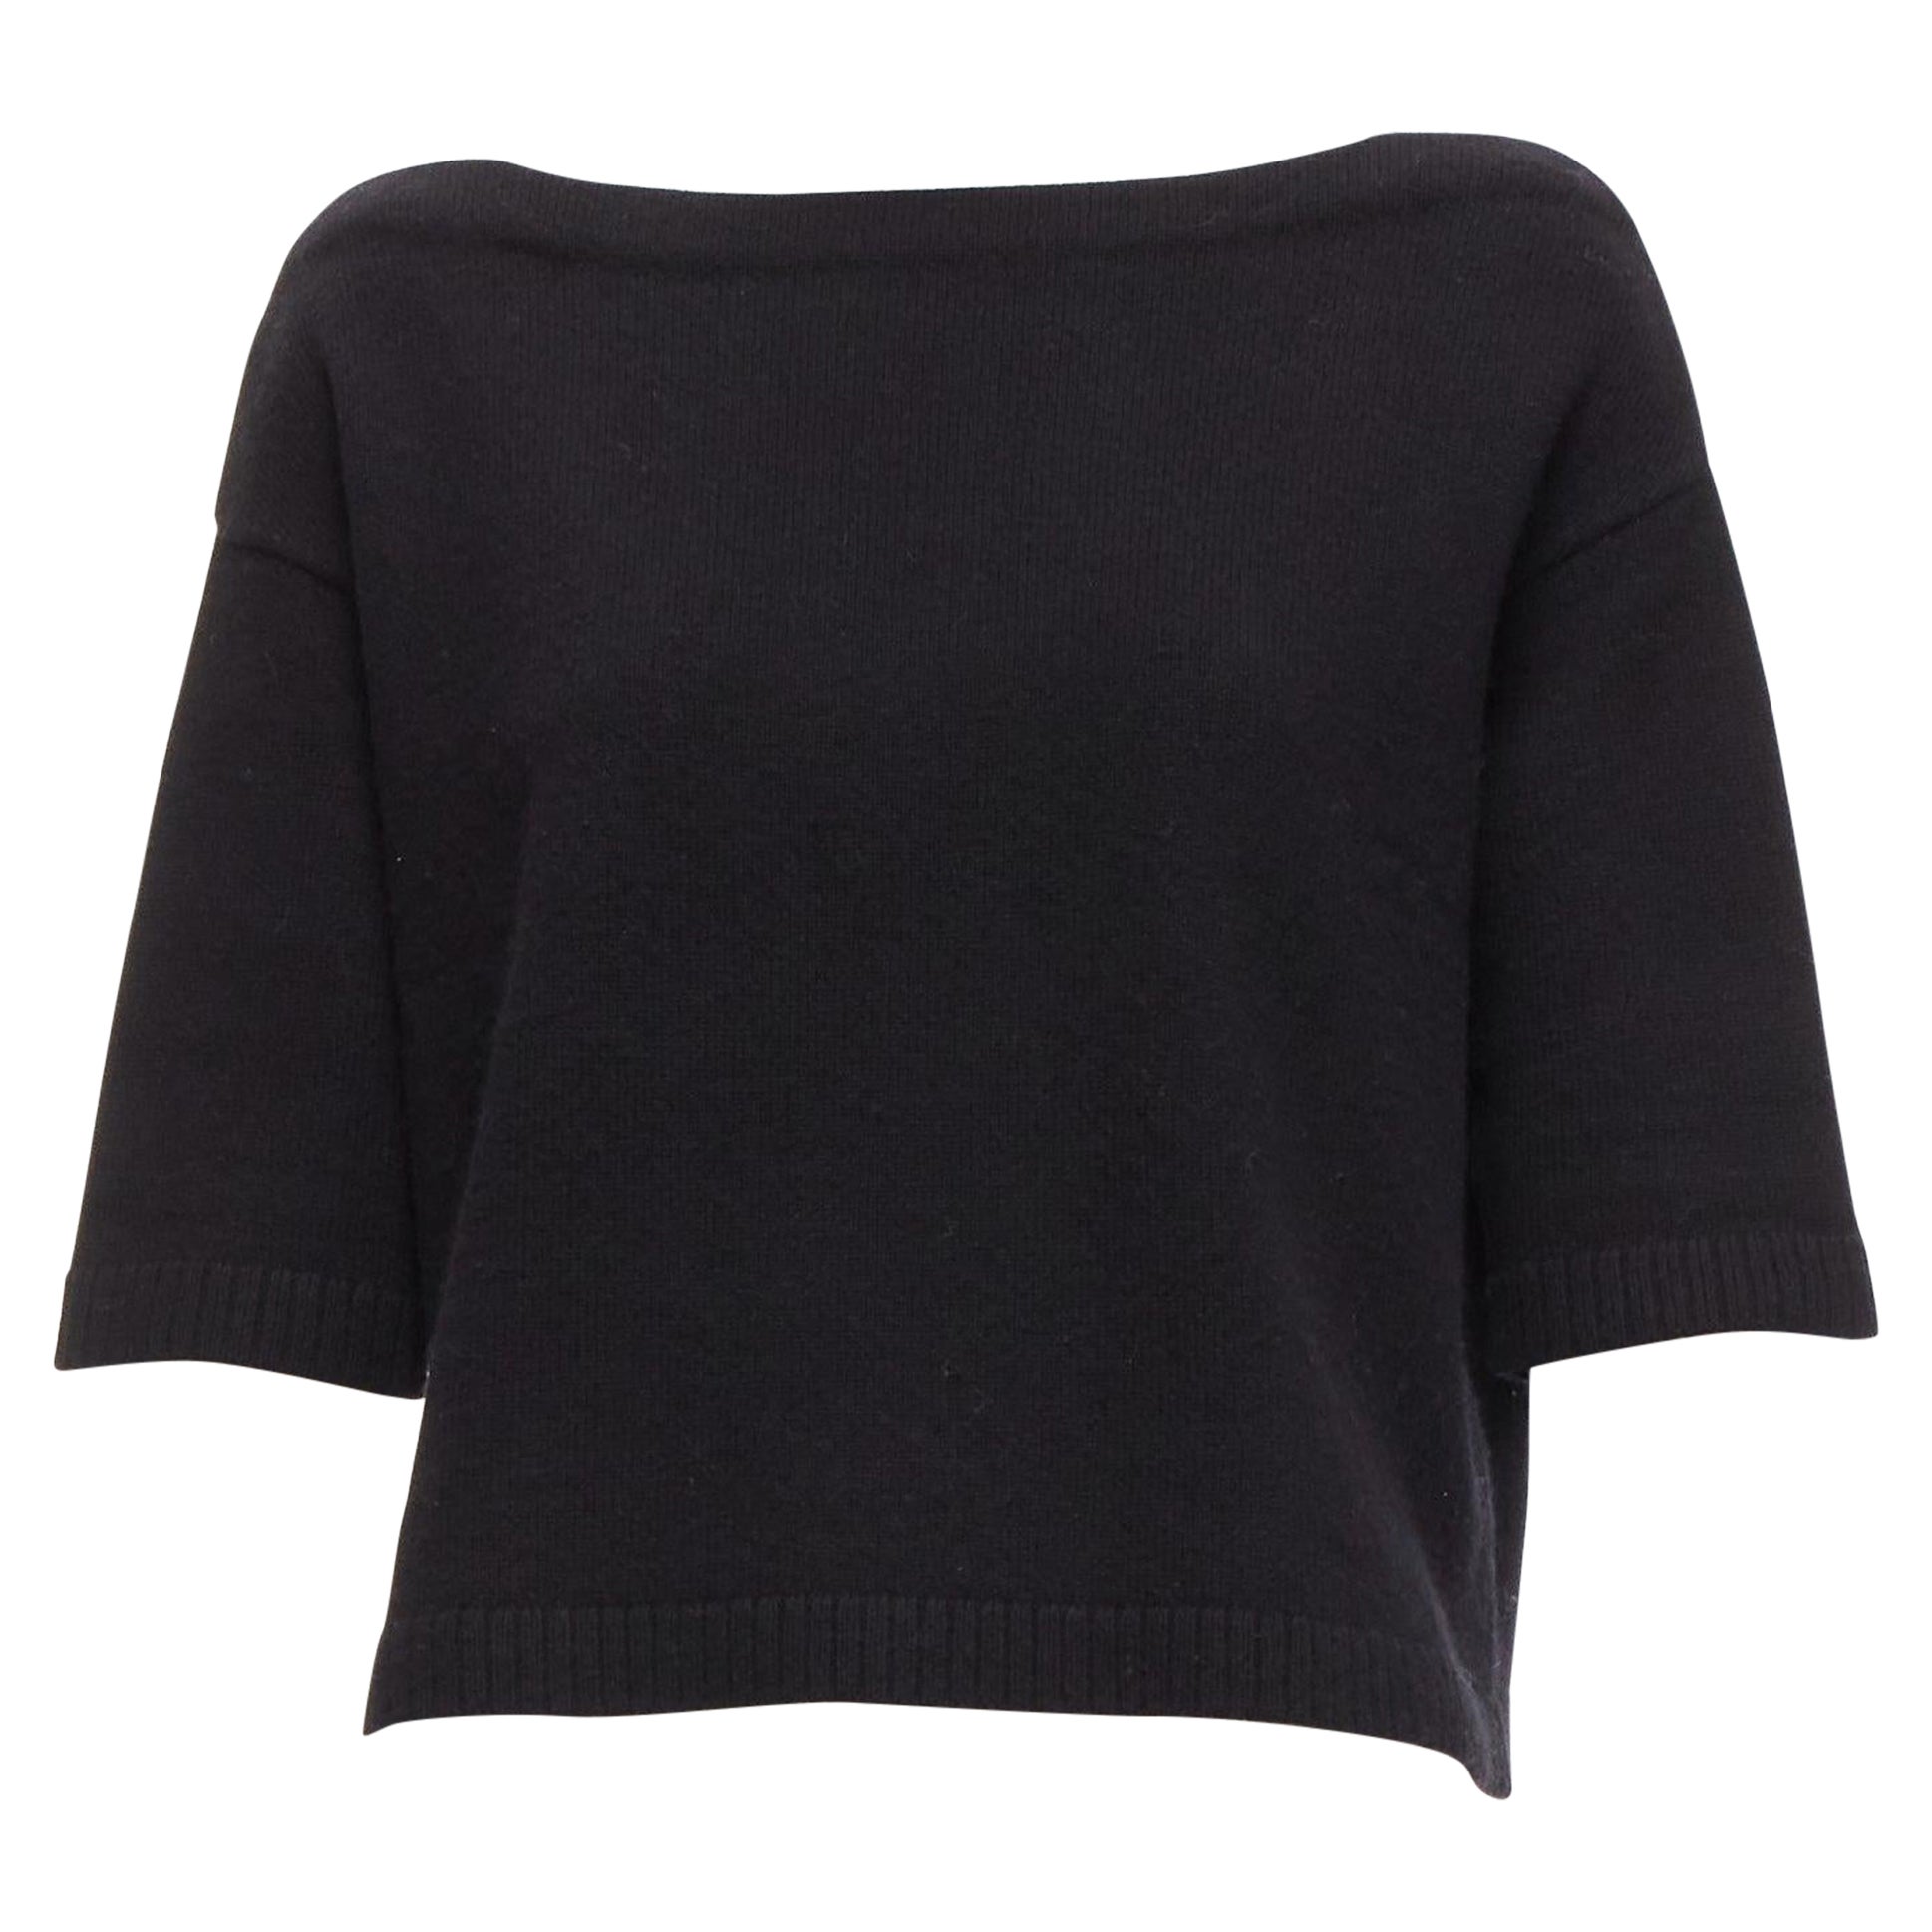 VALENTINO 100% cashmere black bateau neck crop sweater top XS For Sale